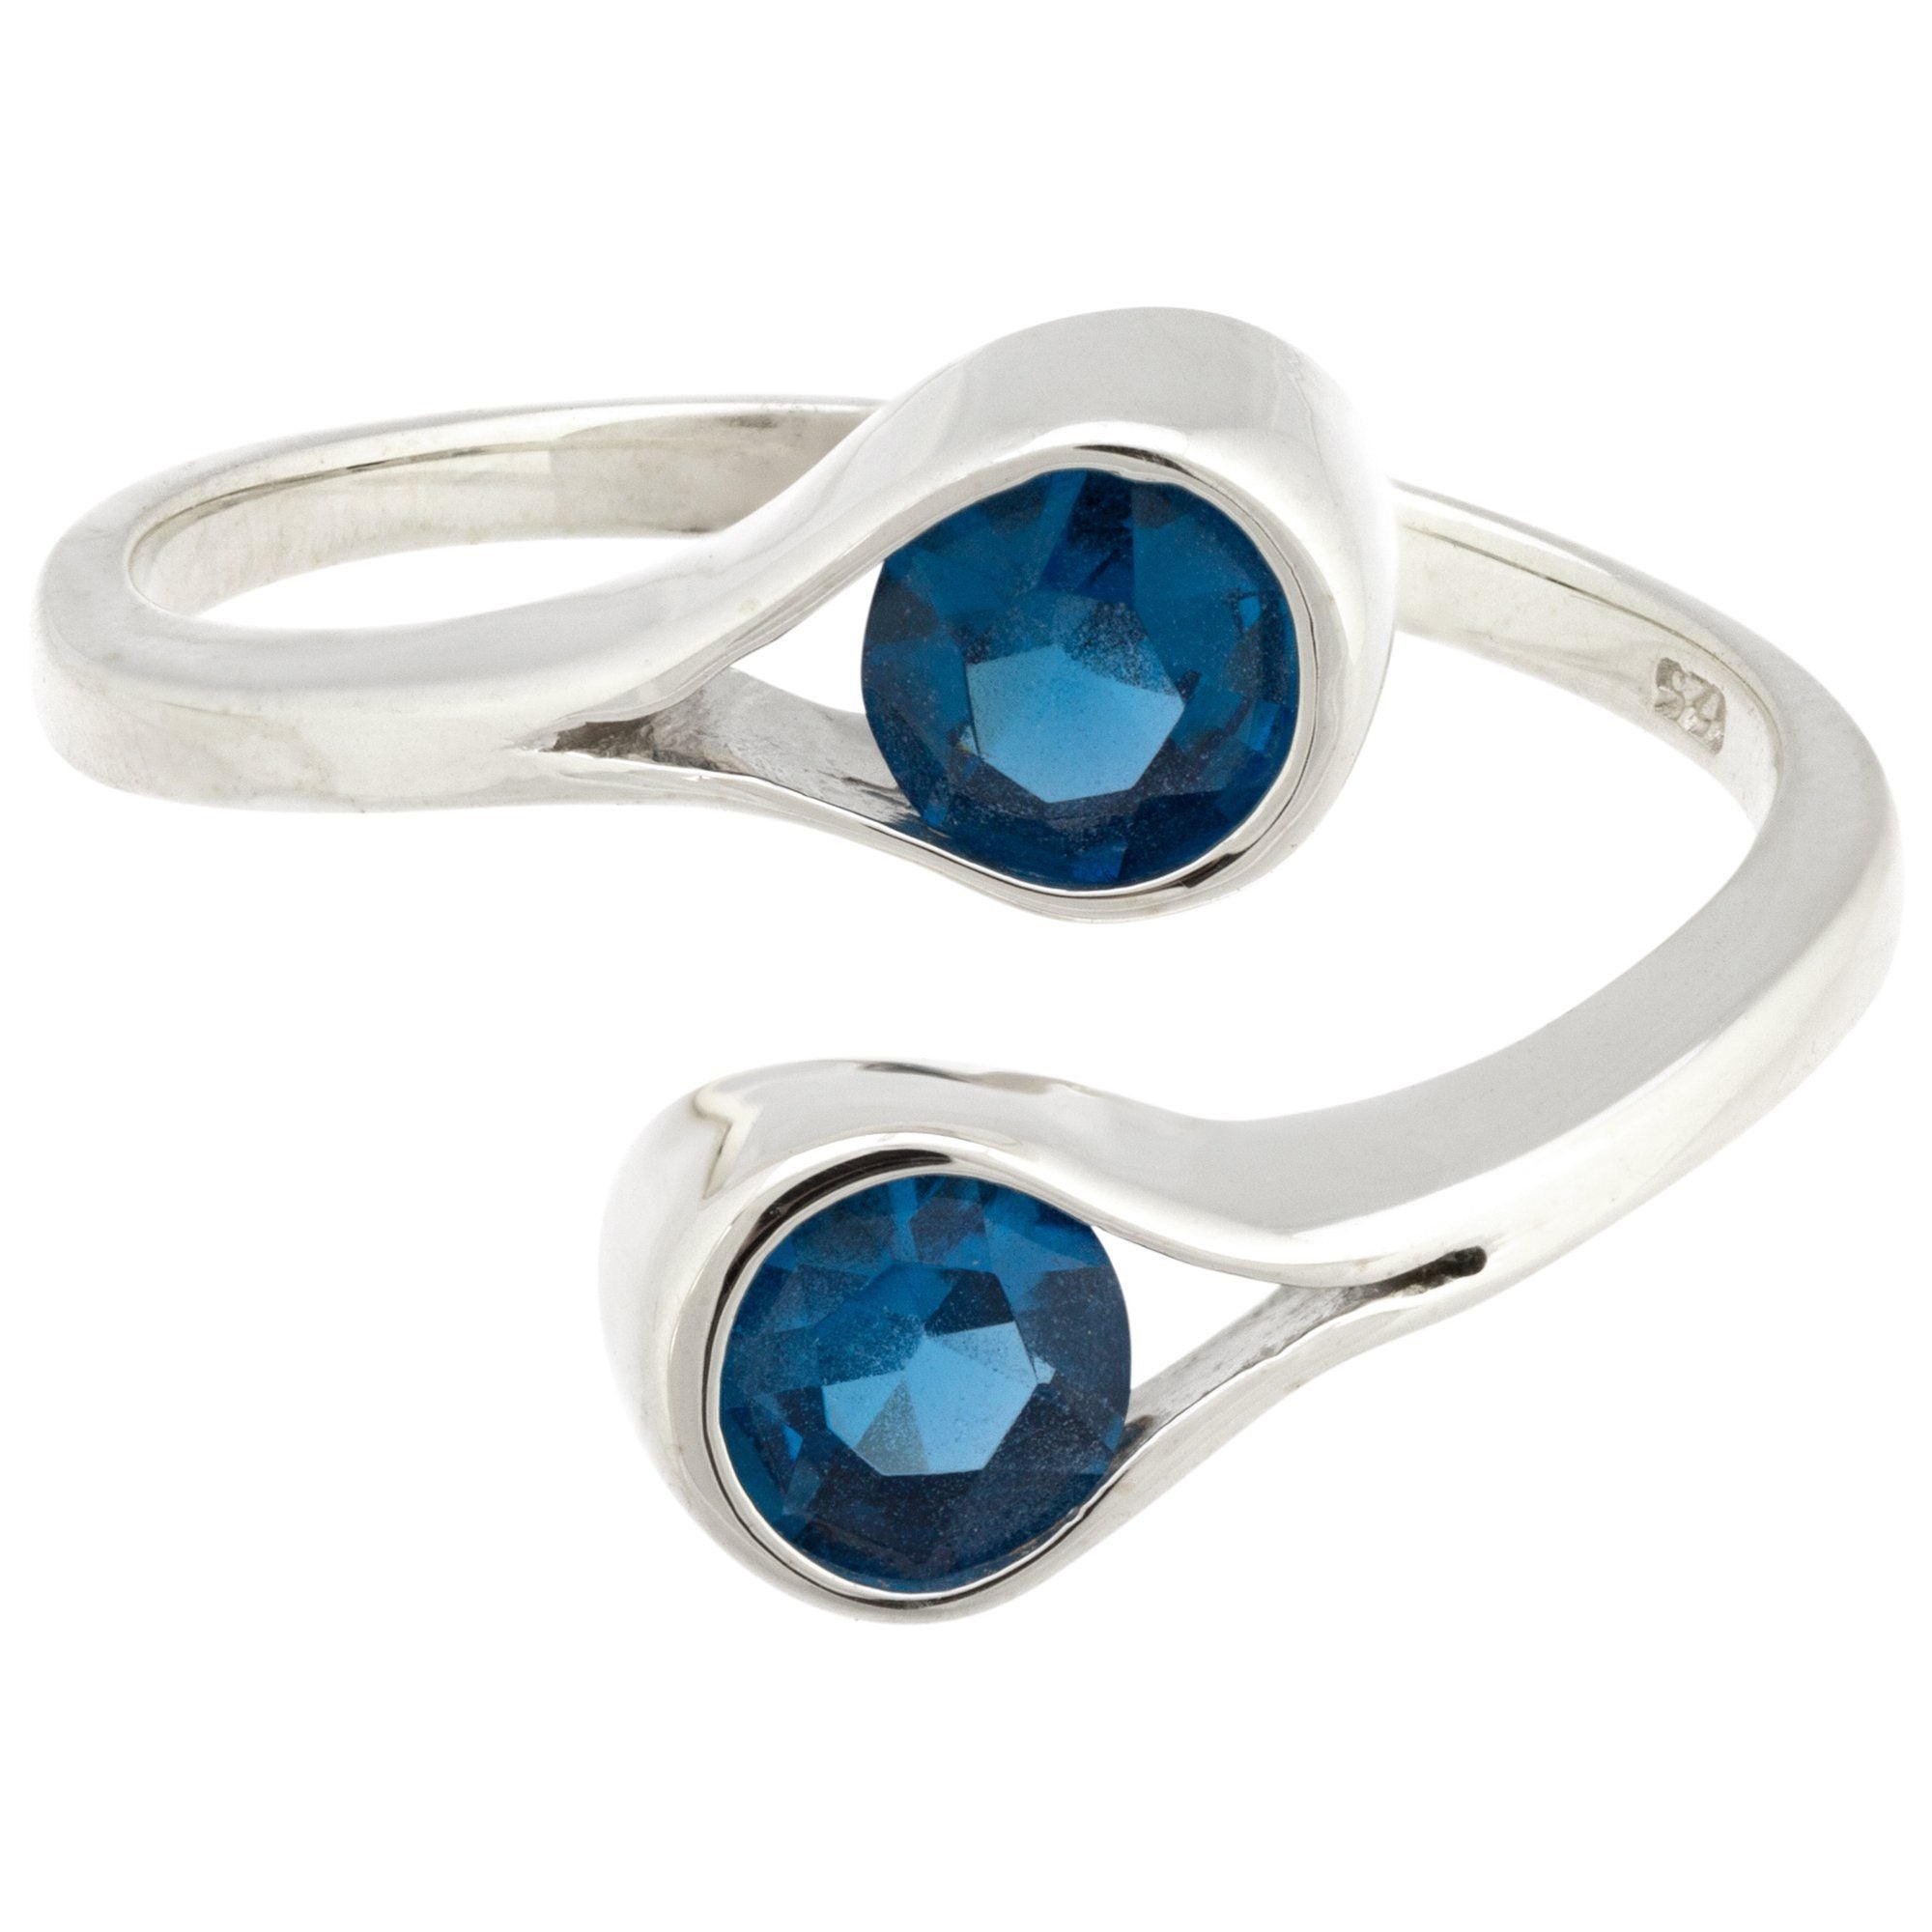 Double Drop Sterling & Gemstone Wrap Ring - Blue Topaz - 7